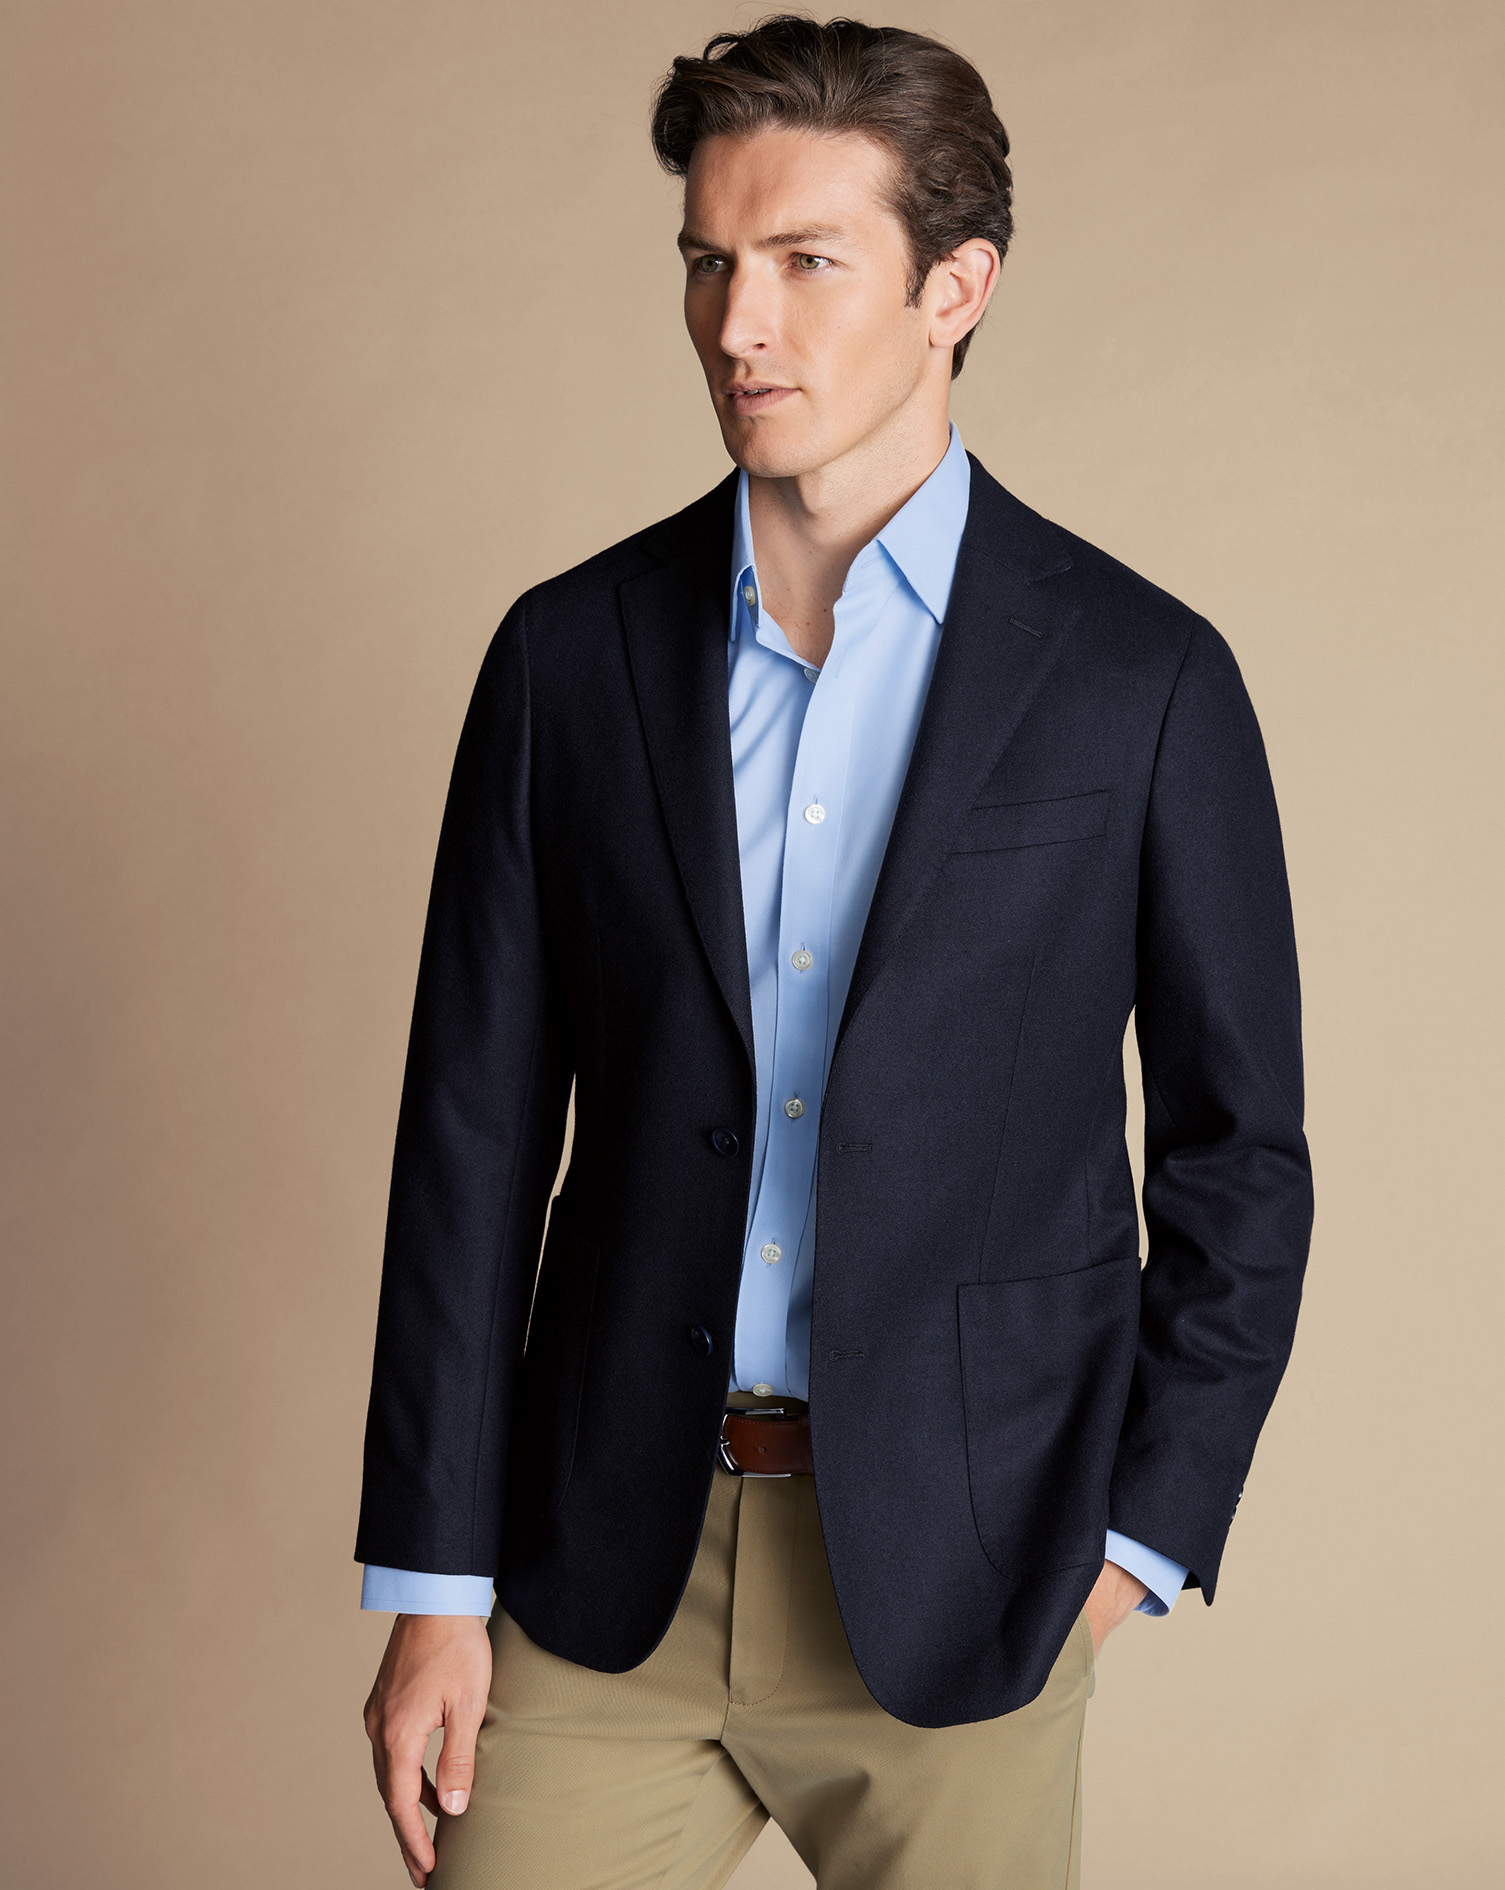 Men's Charles Tyrwhitt Unstructured Twill na Jacket - Navy Blue Size 40R Wool
